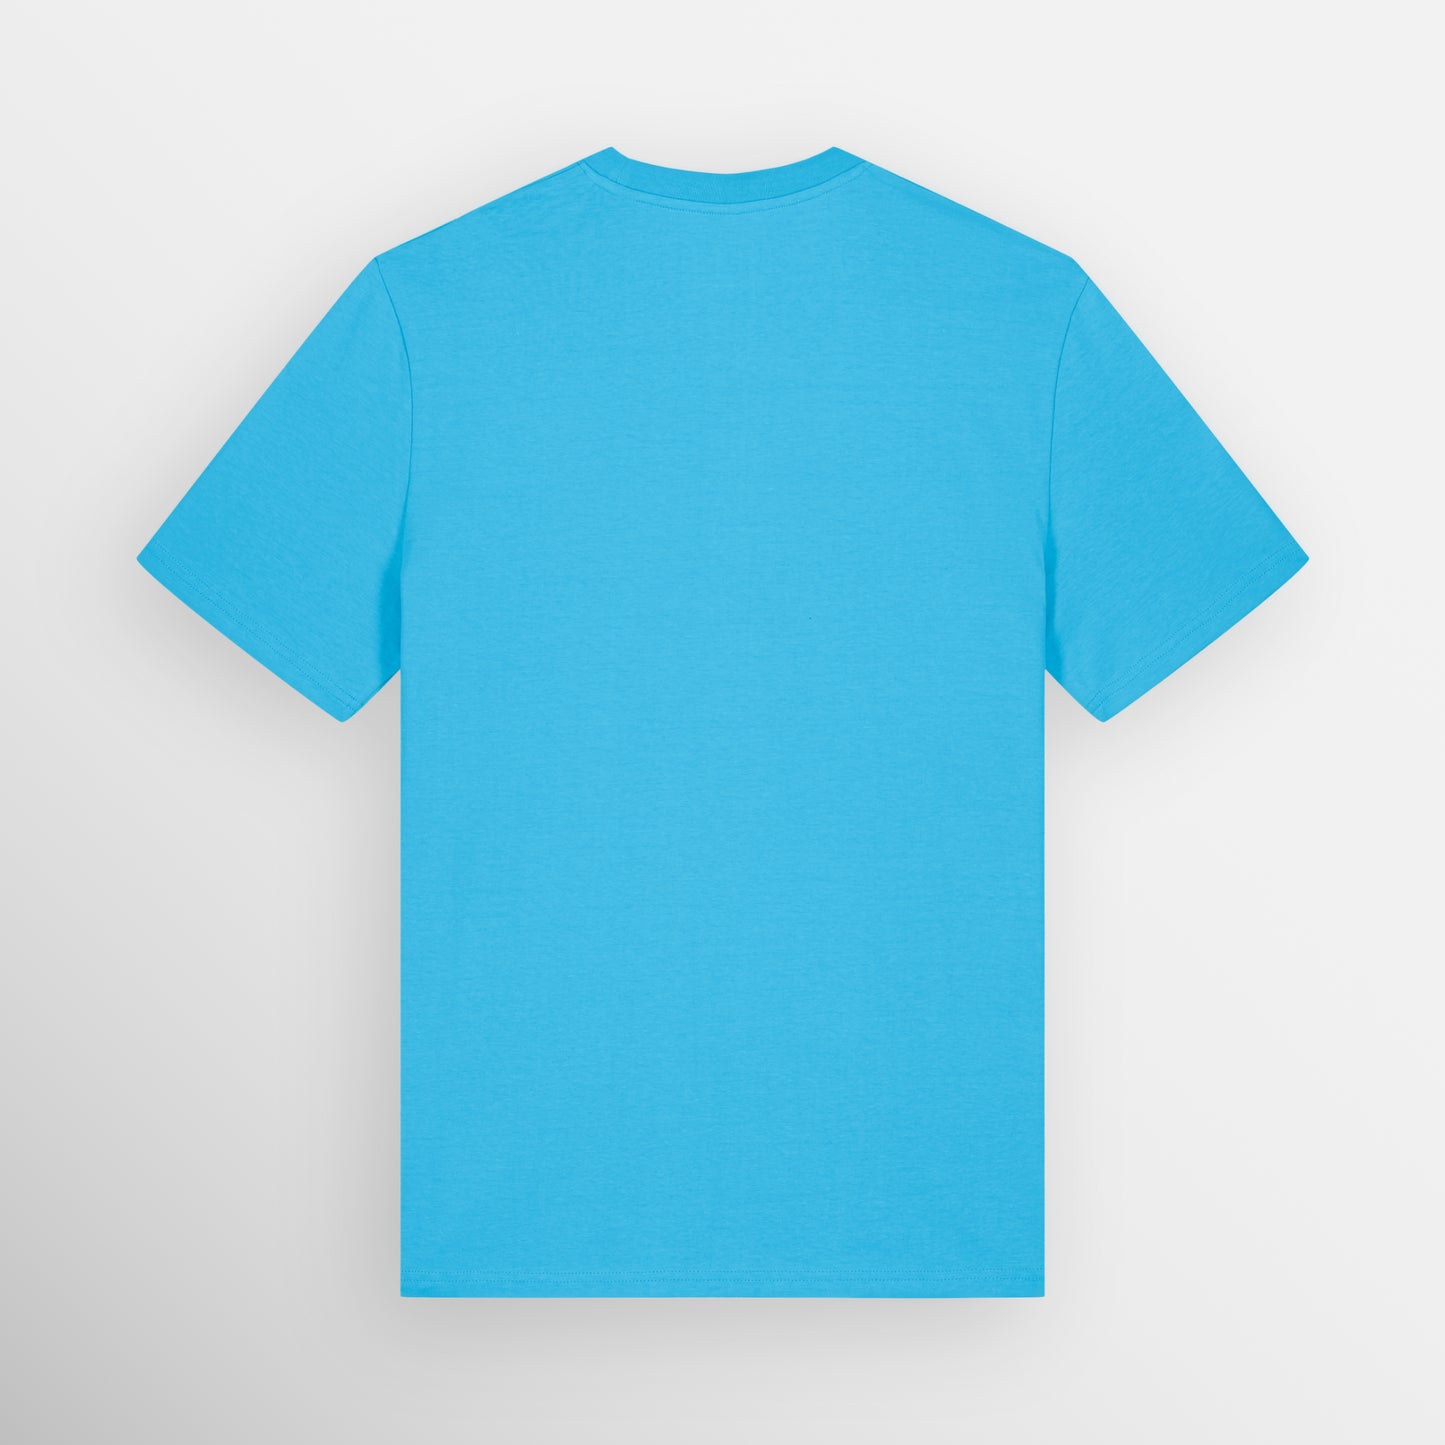 Image shows the plain back of the Aqua Blue coloured regular fit t-shirt.